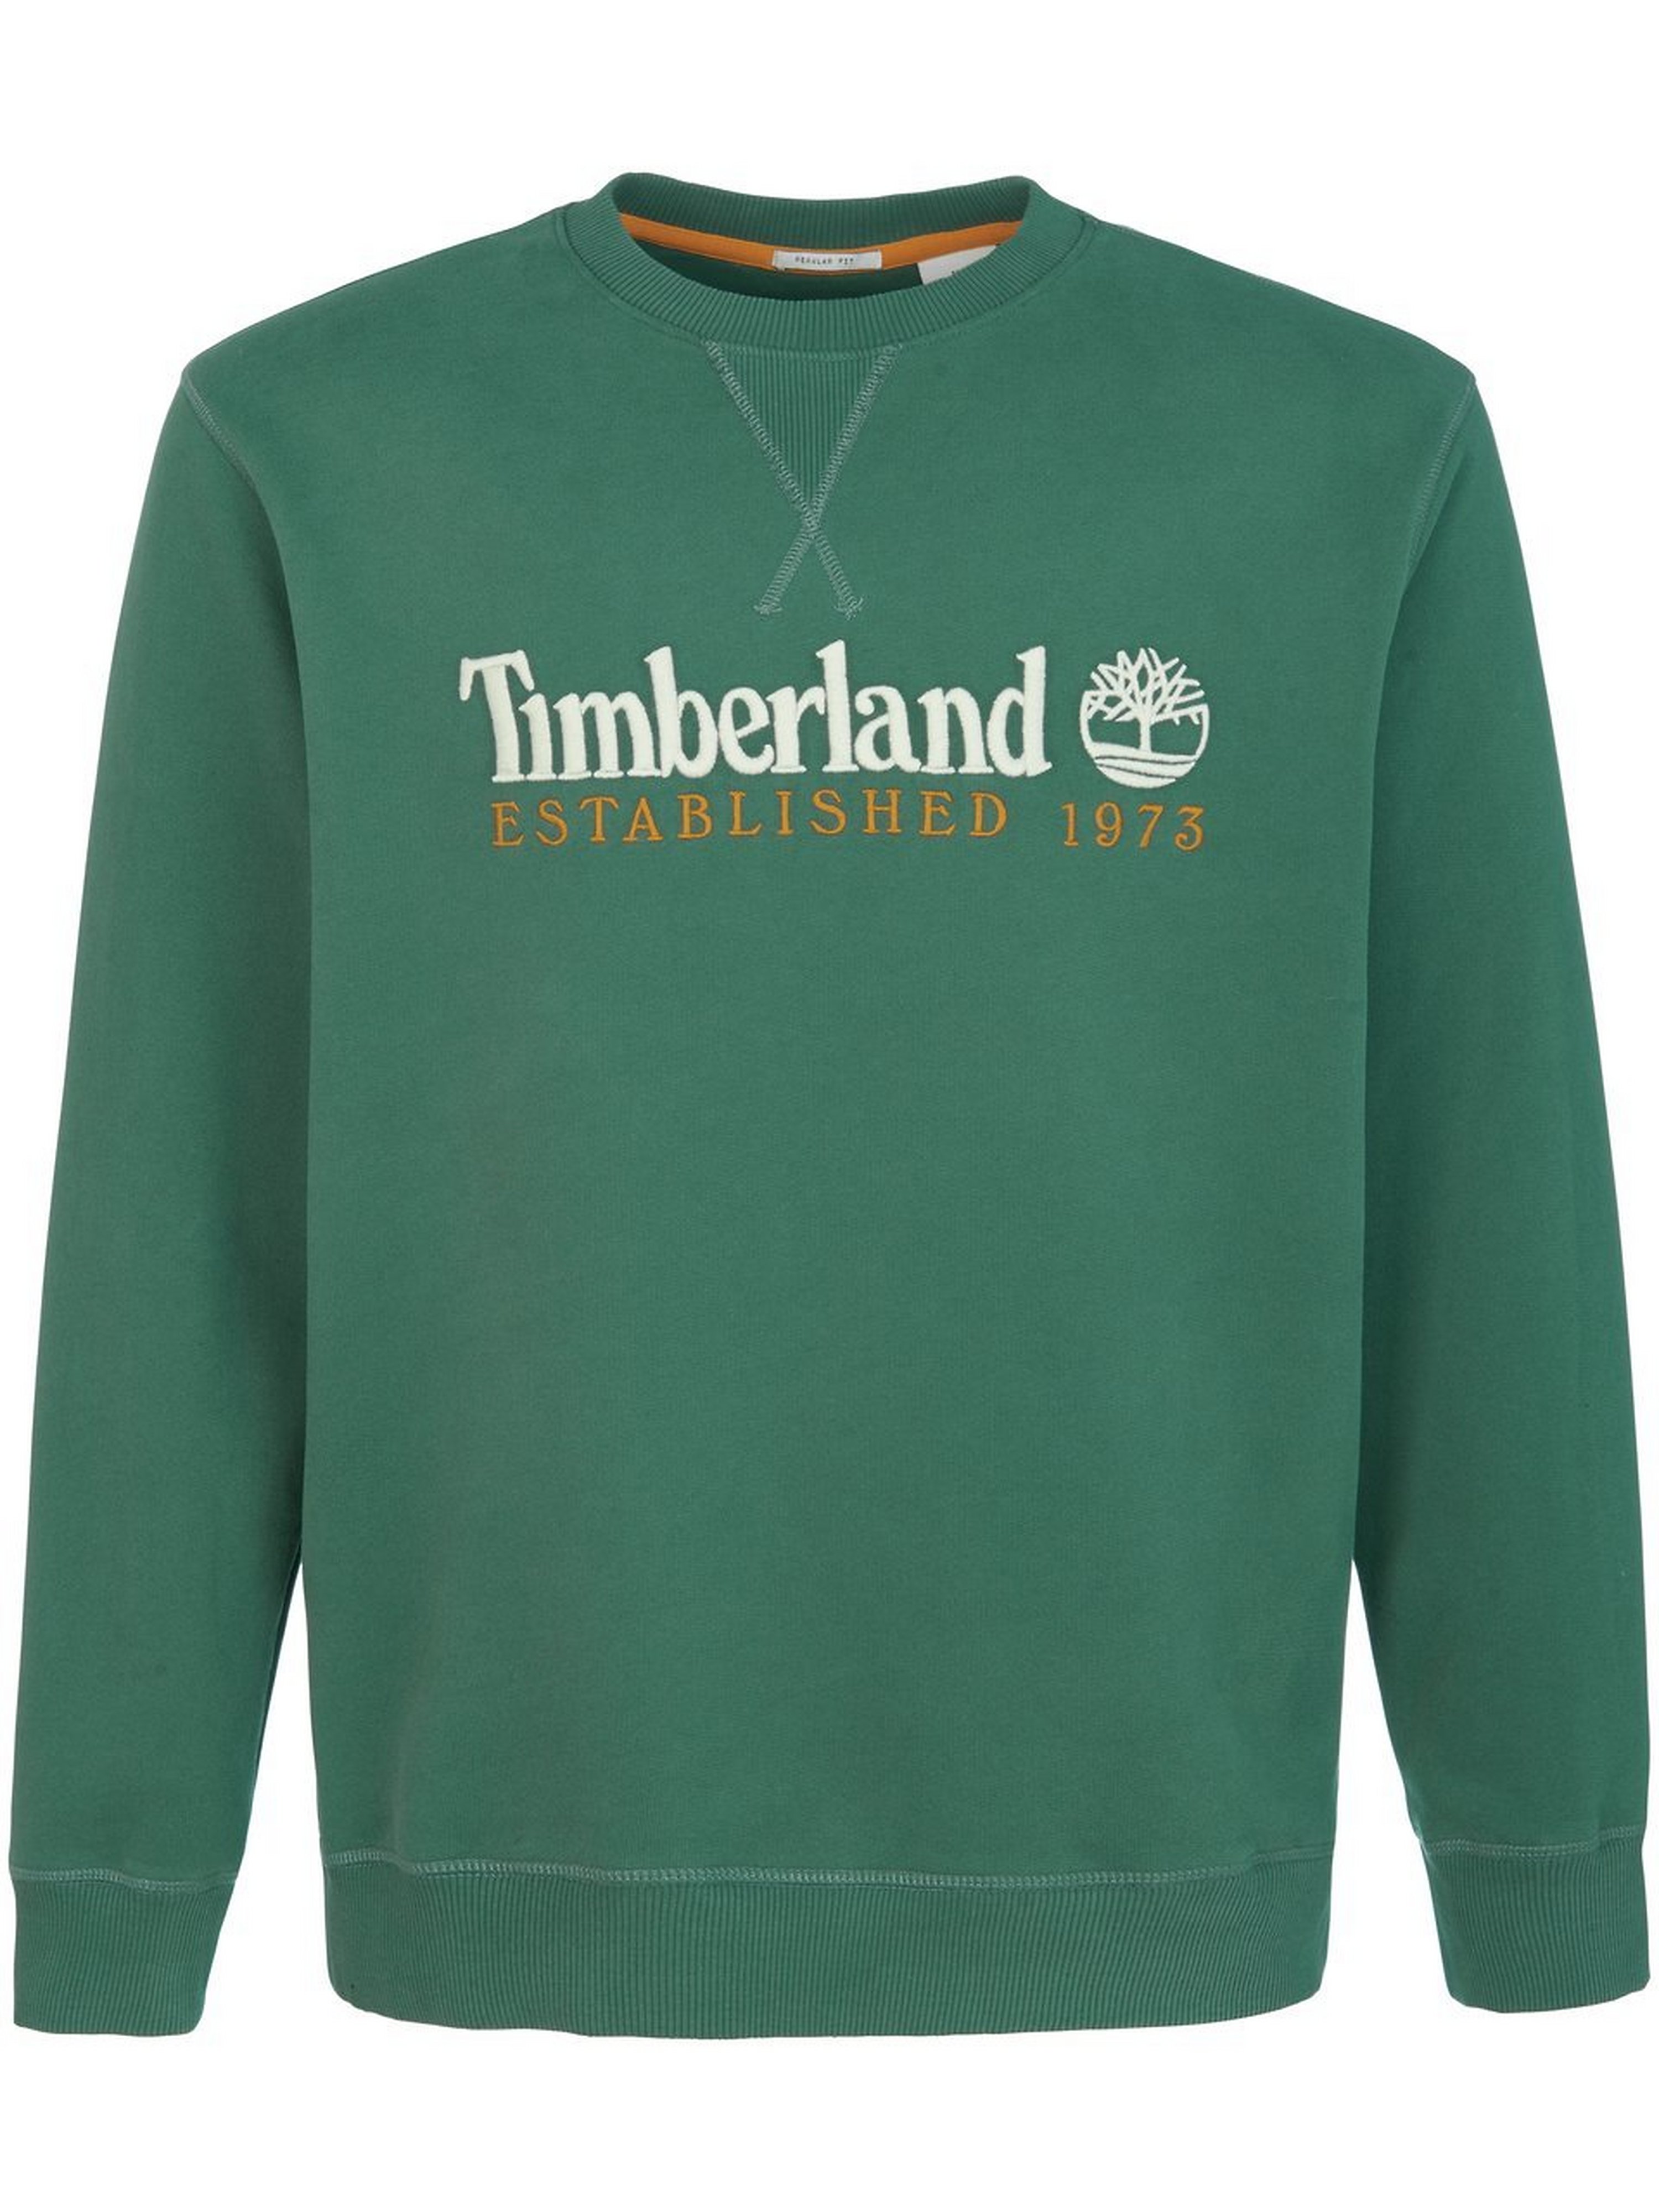 Sweatshirt Timberland grün Größe: 50